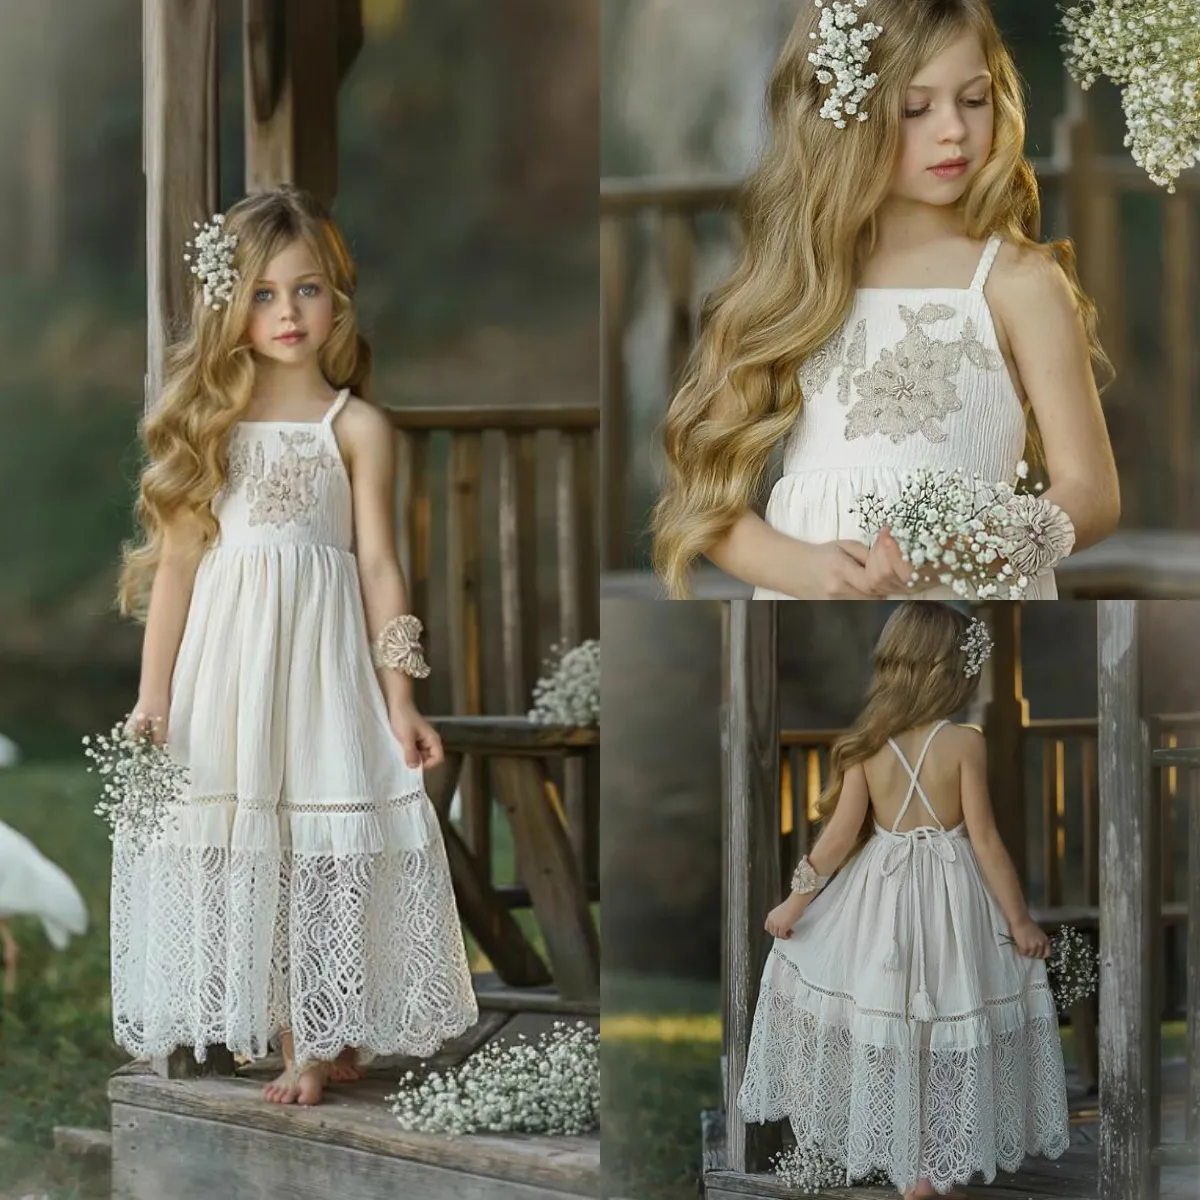 Cute 2020 Flower Girls Dresses For Wedding White Cotton Lace A Line Kids Formal Wear Floor Length Girls Pageant Dress